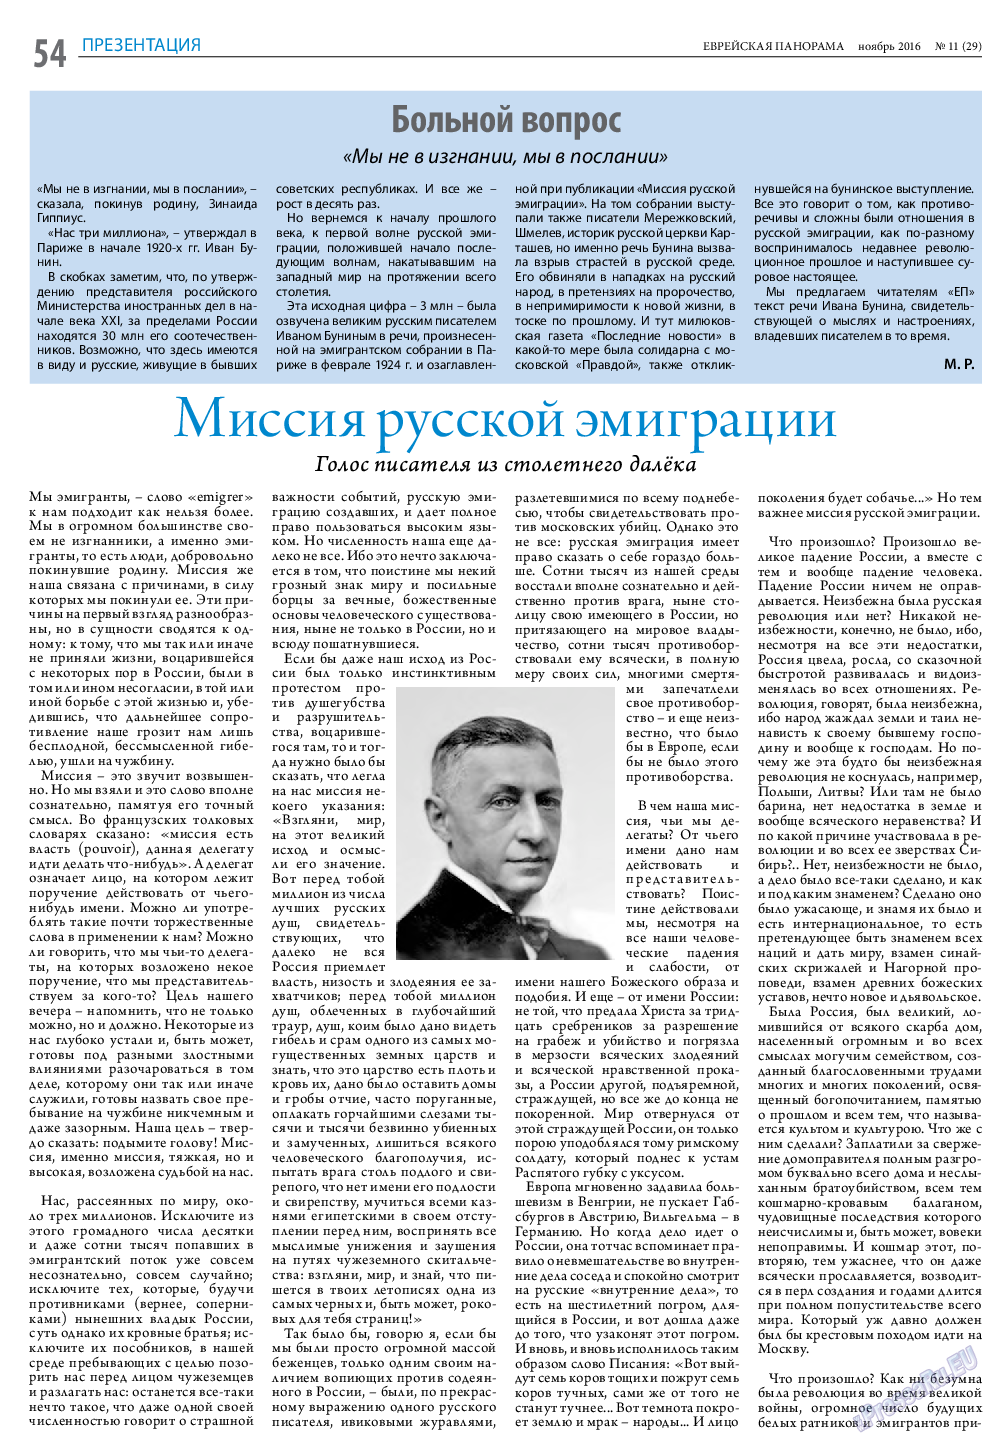 Еврейская панорама, газета. 2016 №11 стр.54